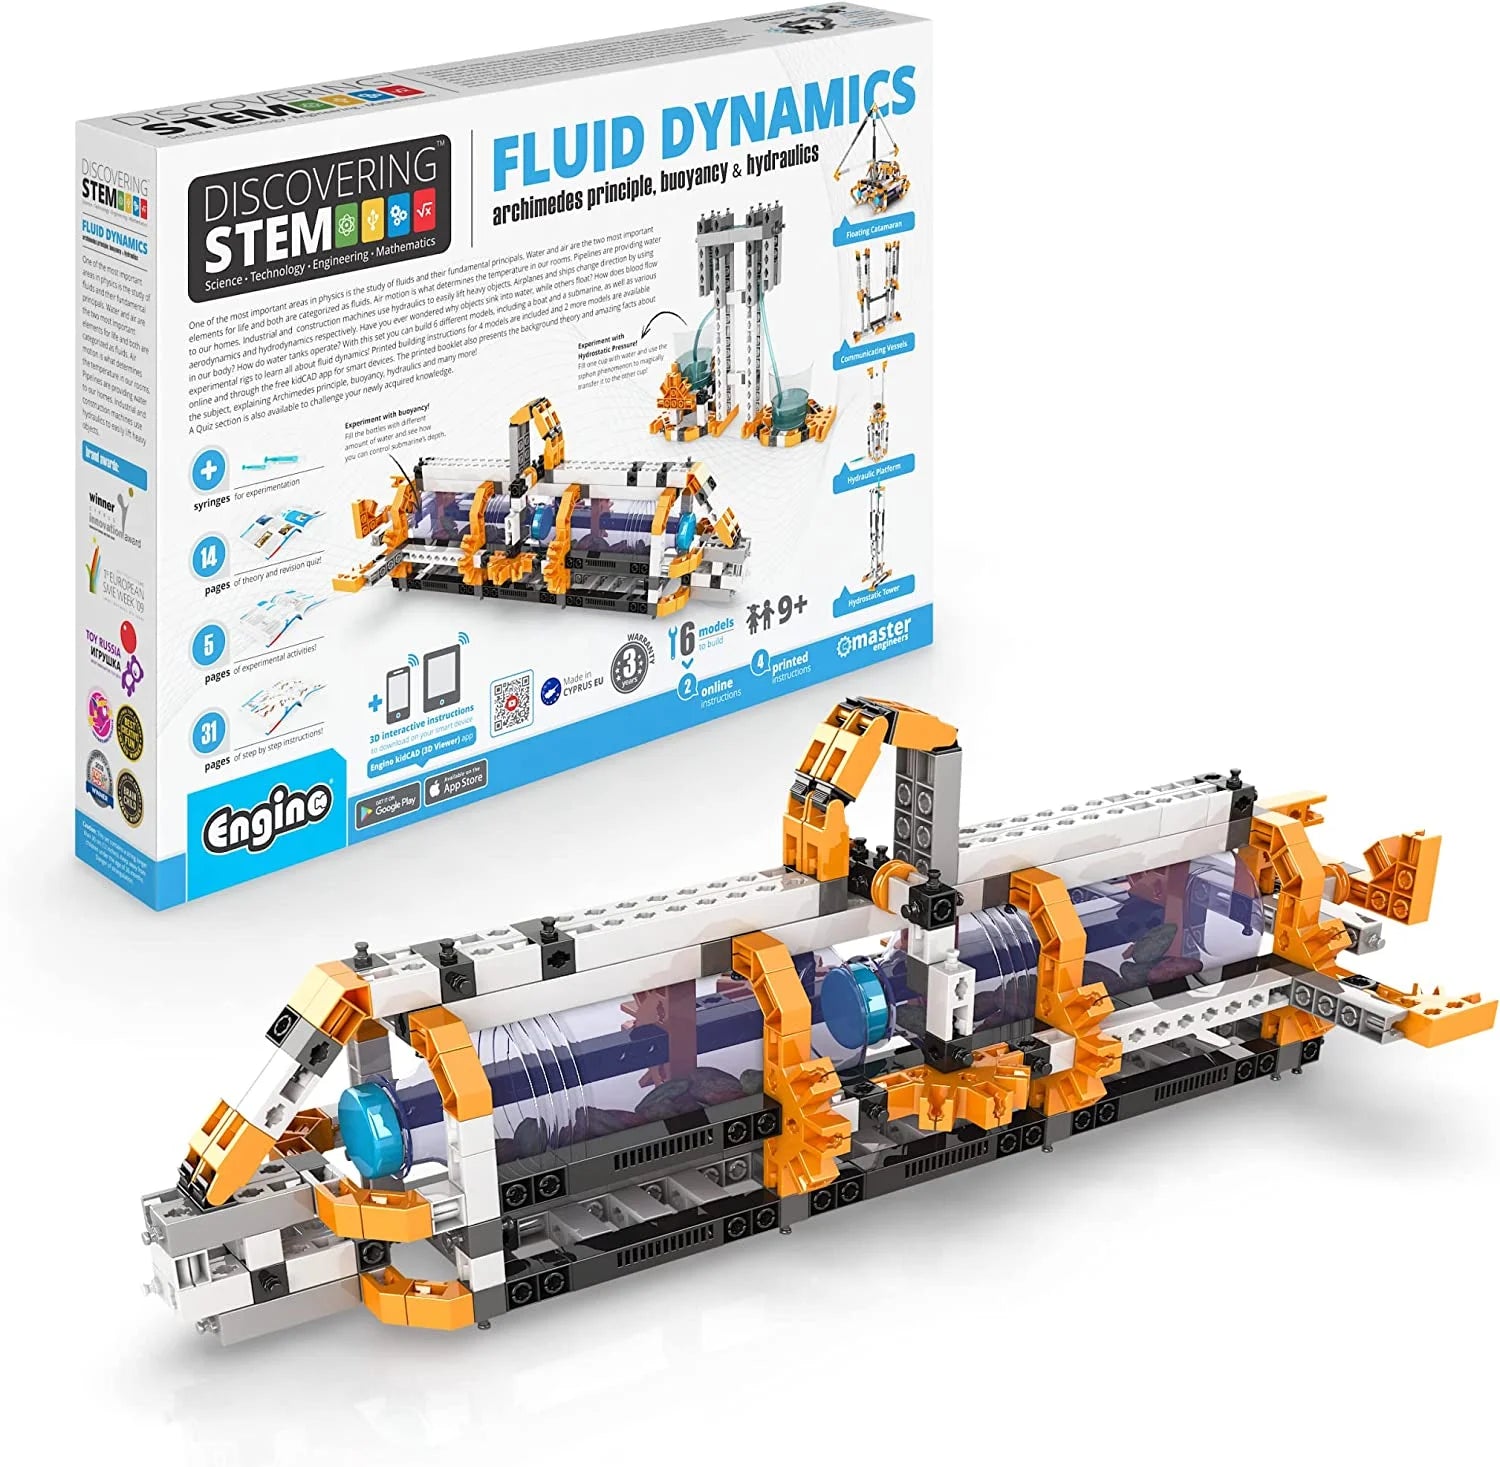 - STEM Toys, Fluid Dynamics, Construction Toys for Kids 9+, STEM Building Toys